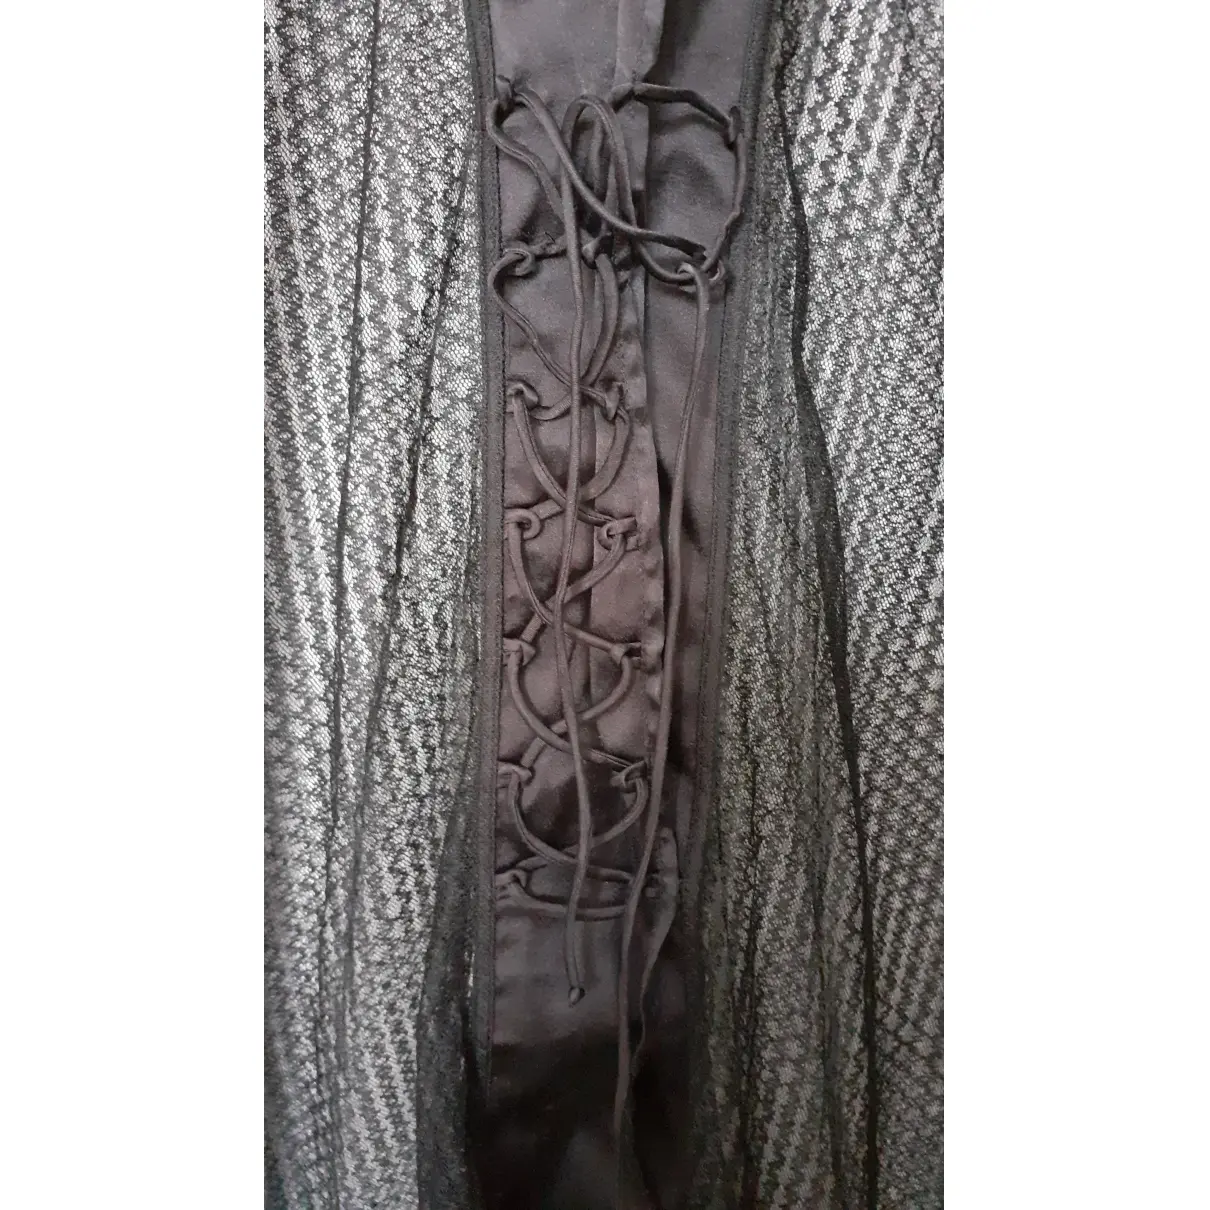 Buy La Perla Silk lingerie online